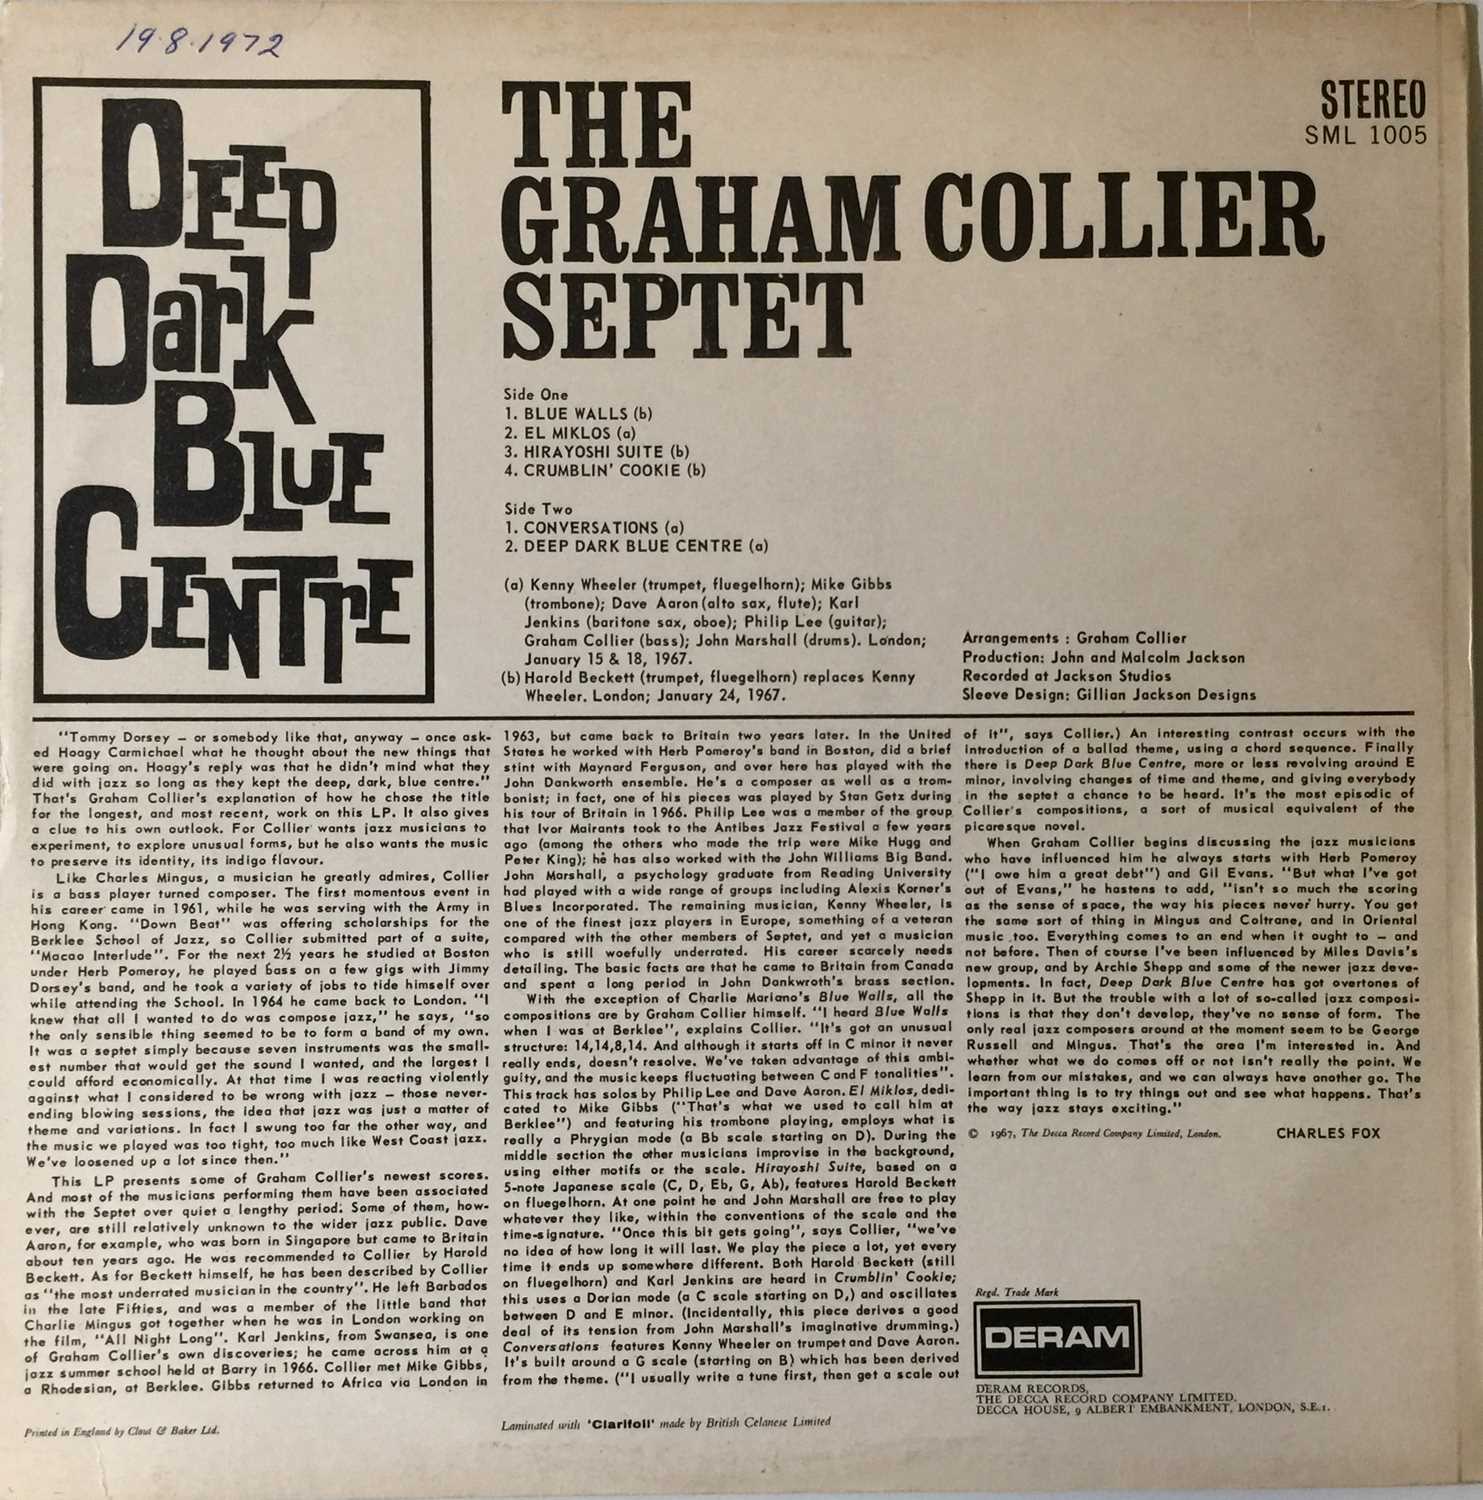 THE GRAHAM COLLIER SEPTET - DEEP DARK BLUE CENTRE LP (UK DERAM - SML 1005) - Image 3 of 5